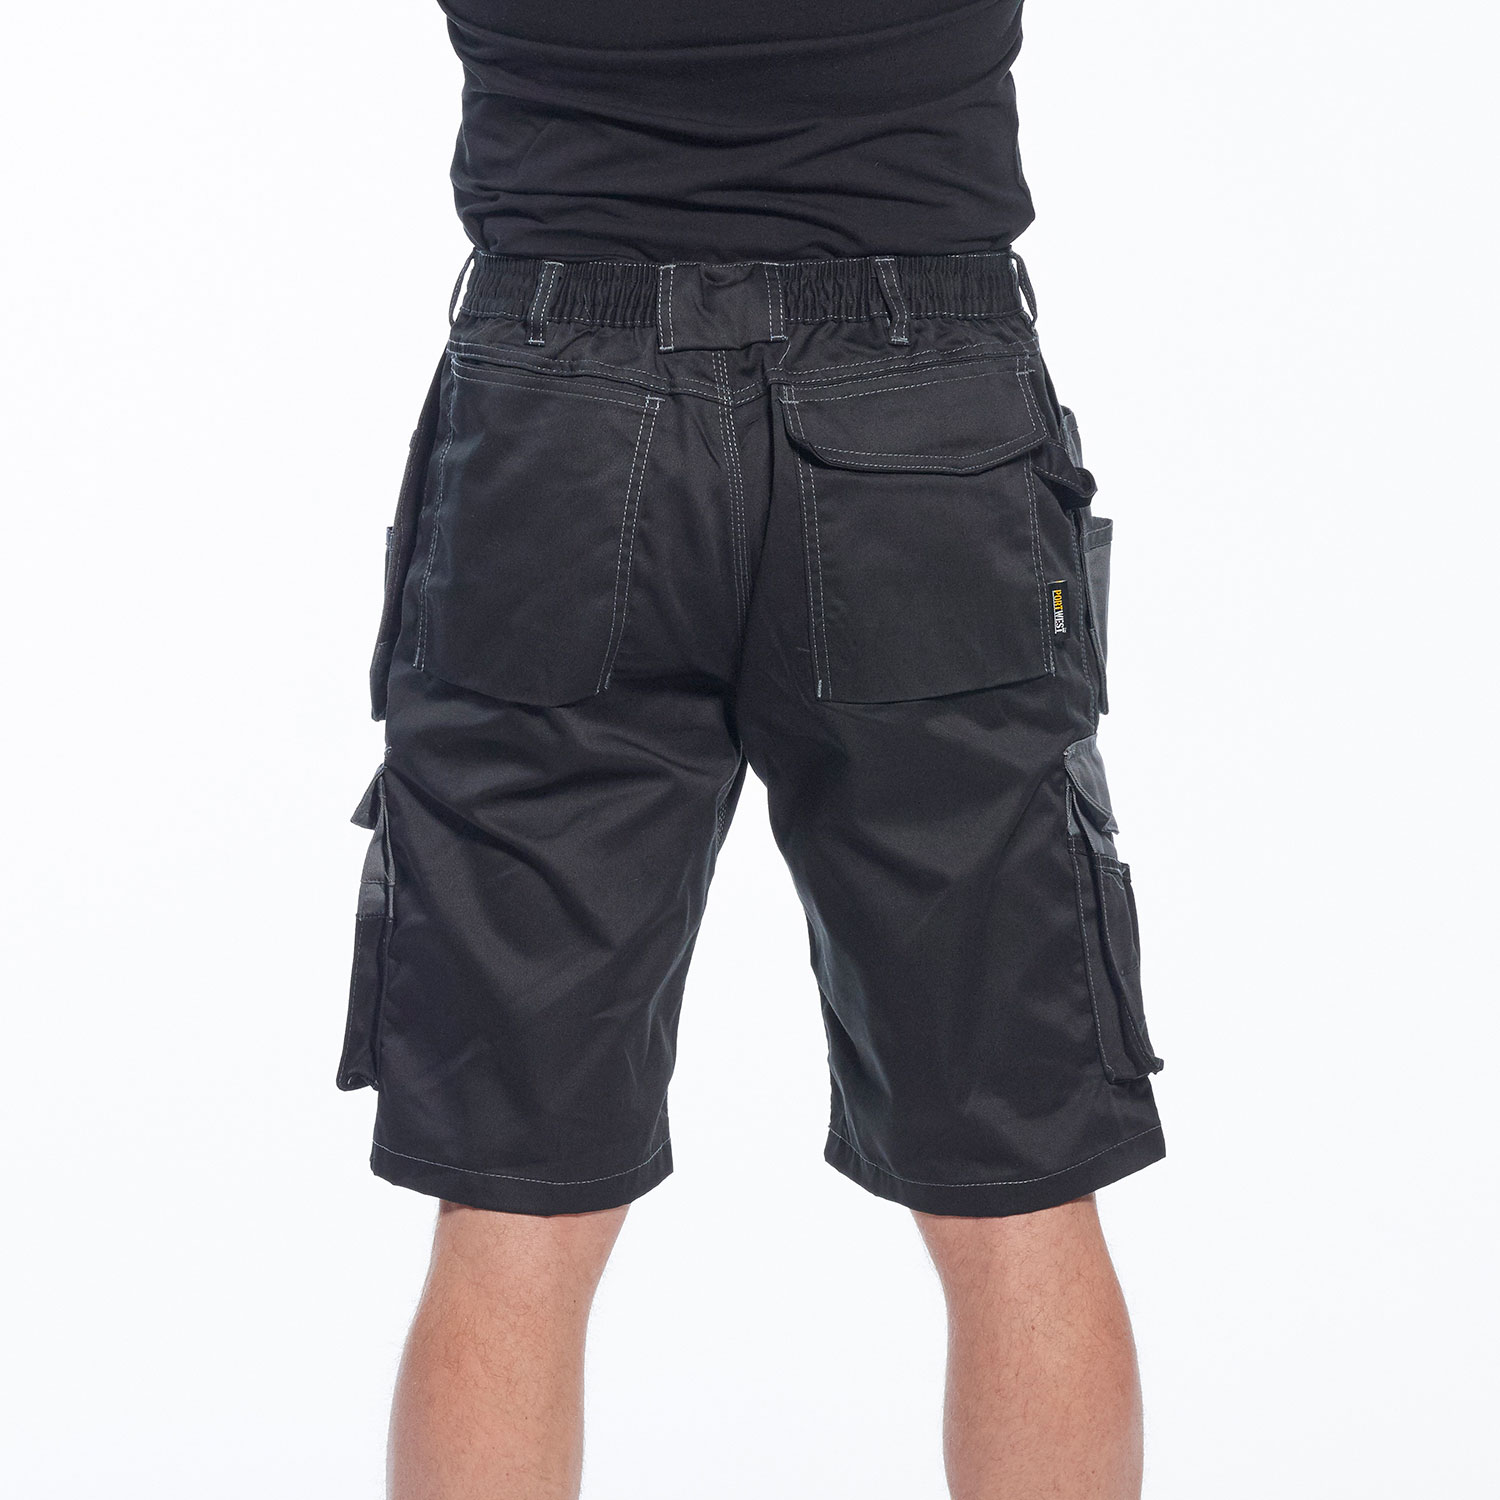 Portwest Holster Shorts - Black/Grey - Protrade